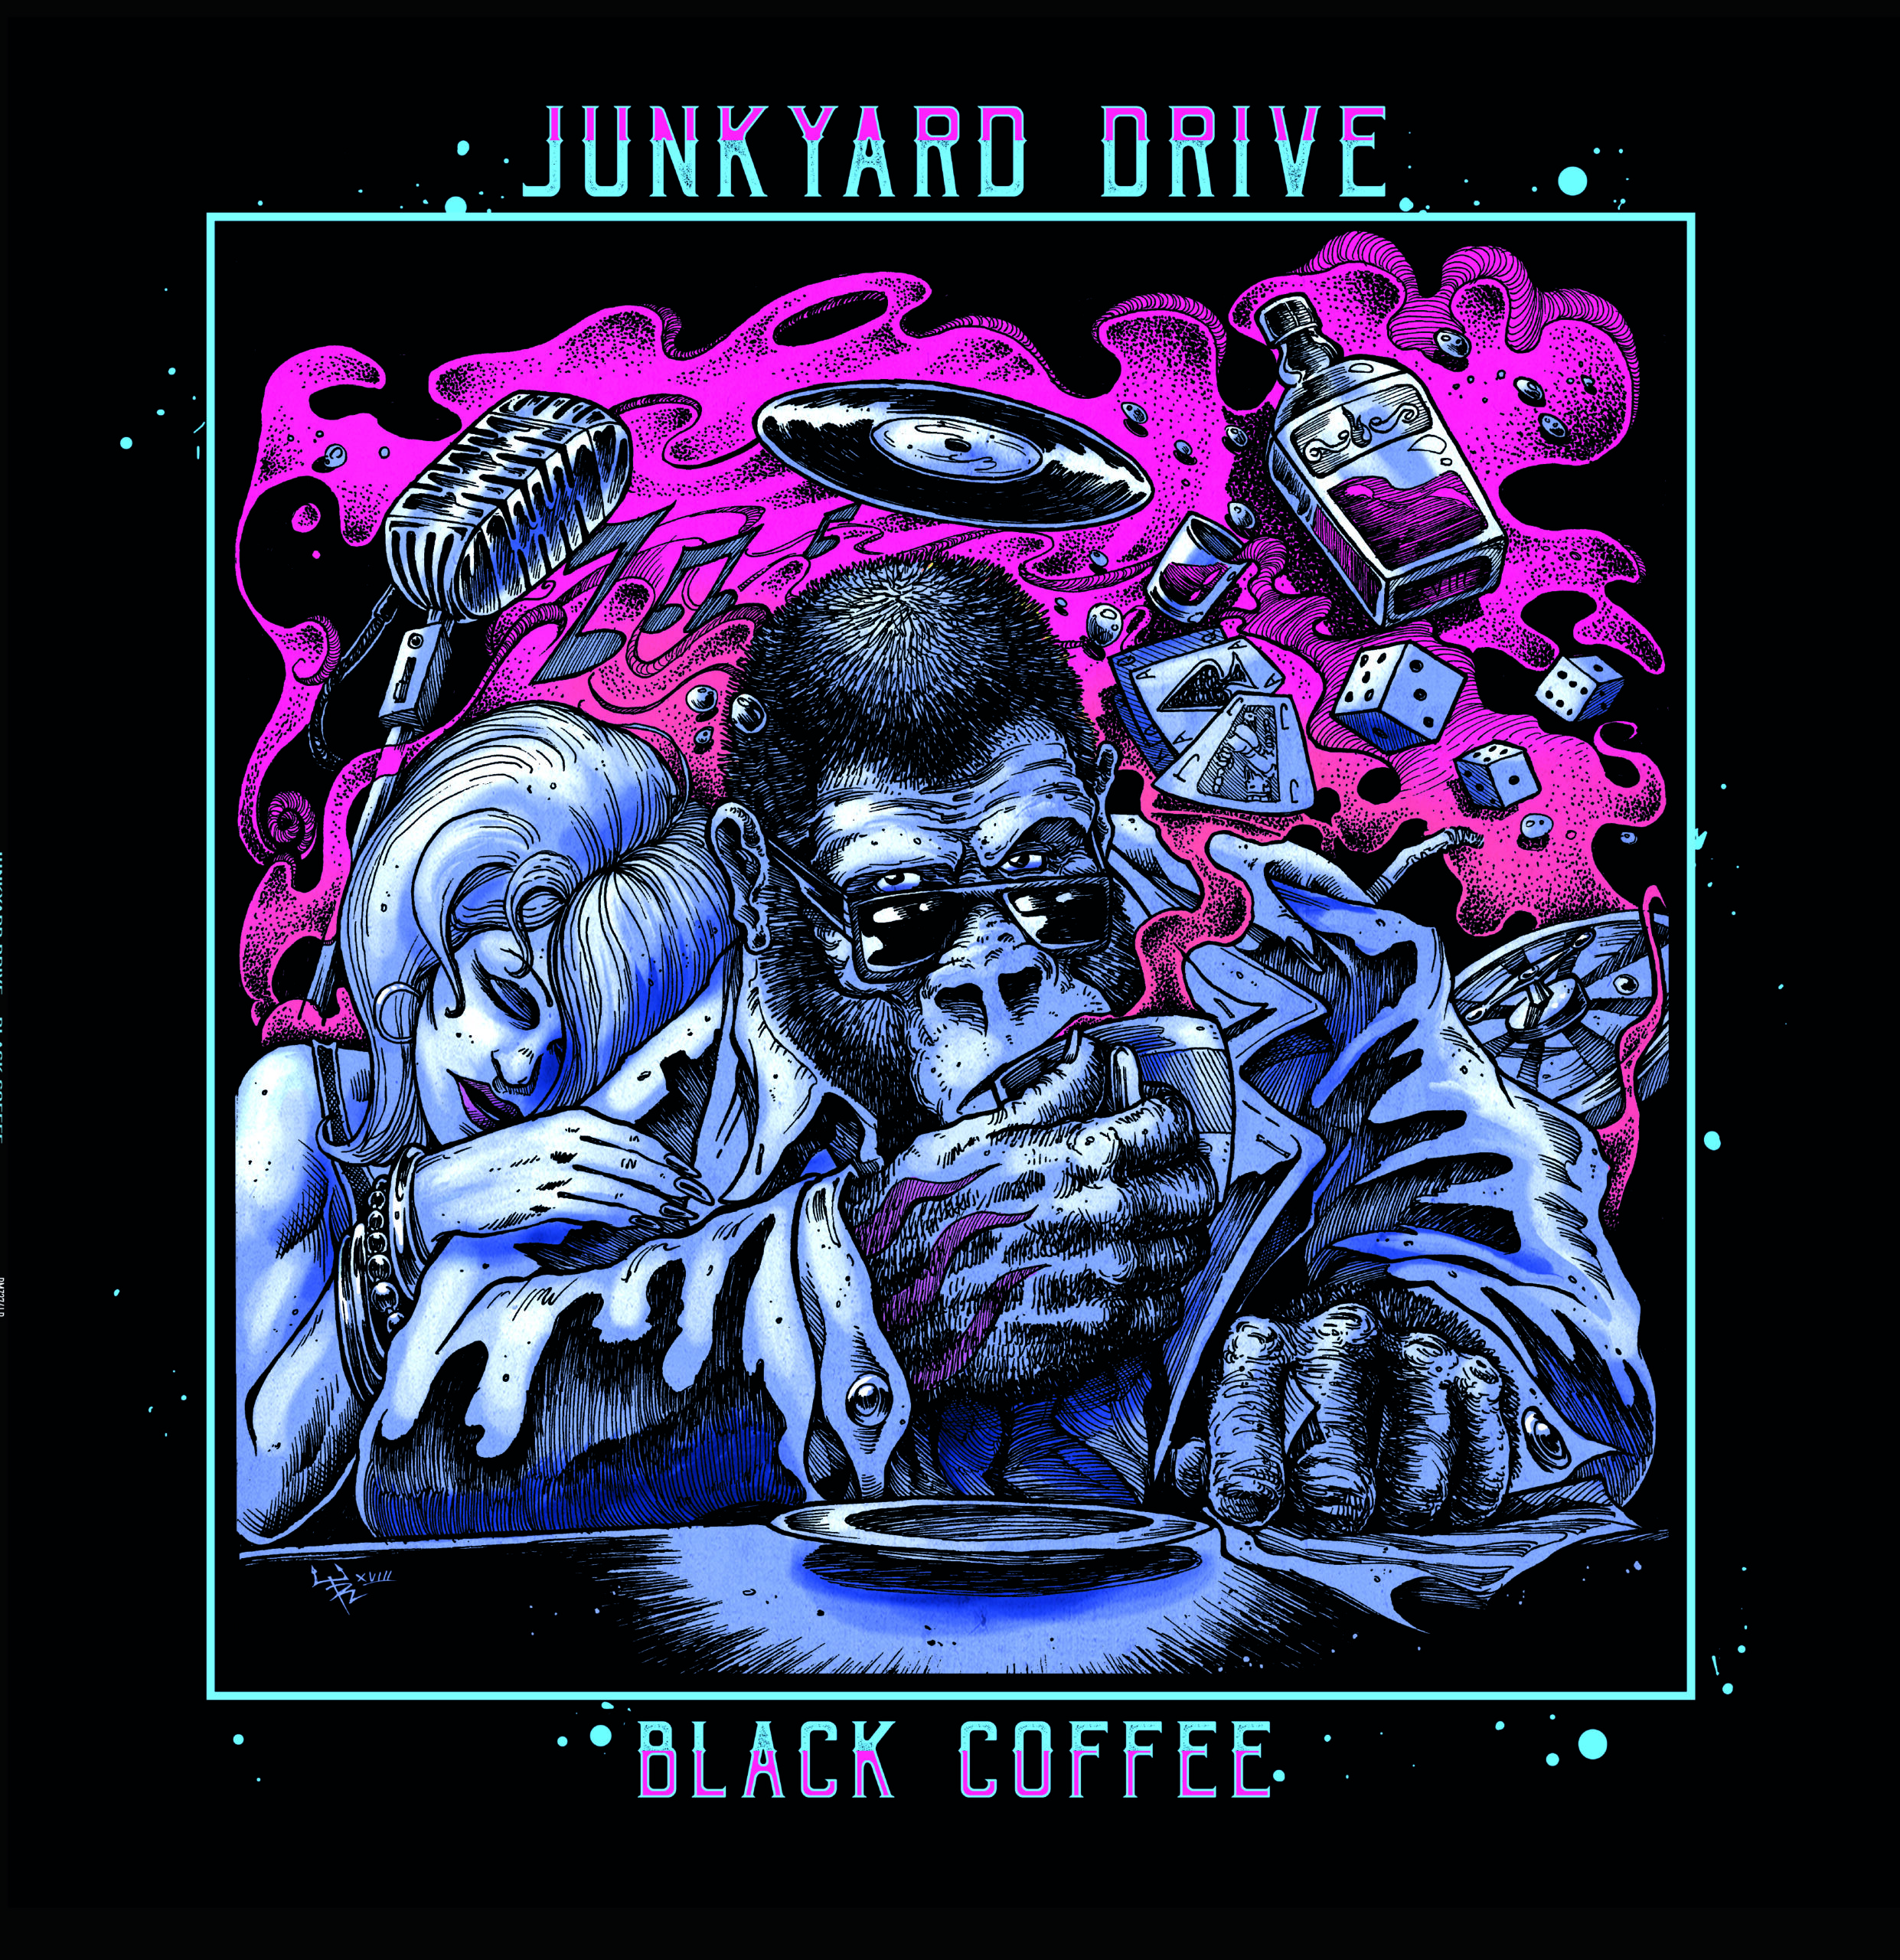 Junkyard Drive – Black Coffee reissue